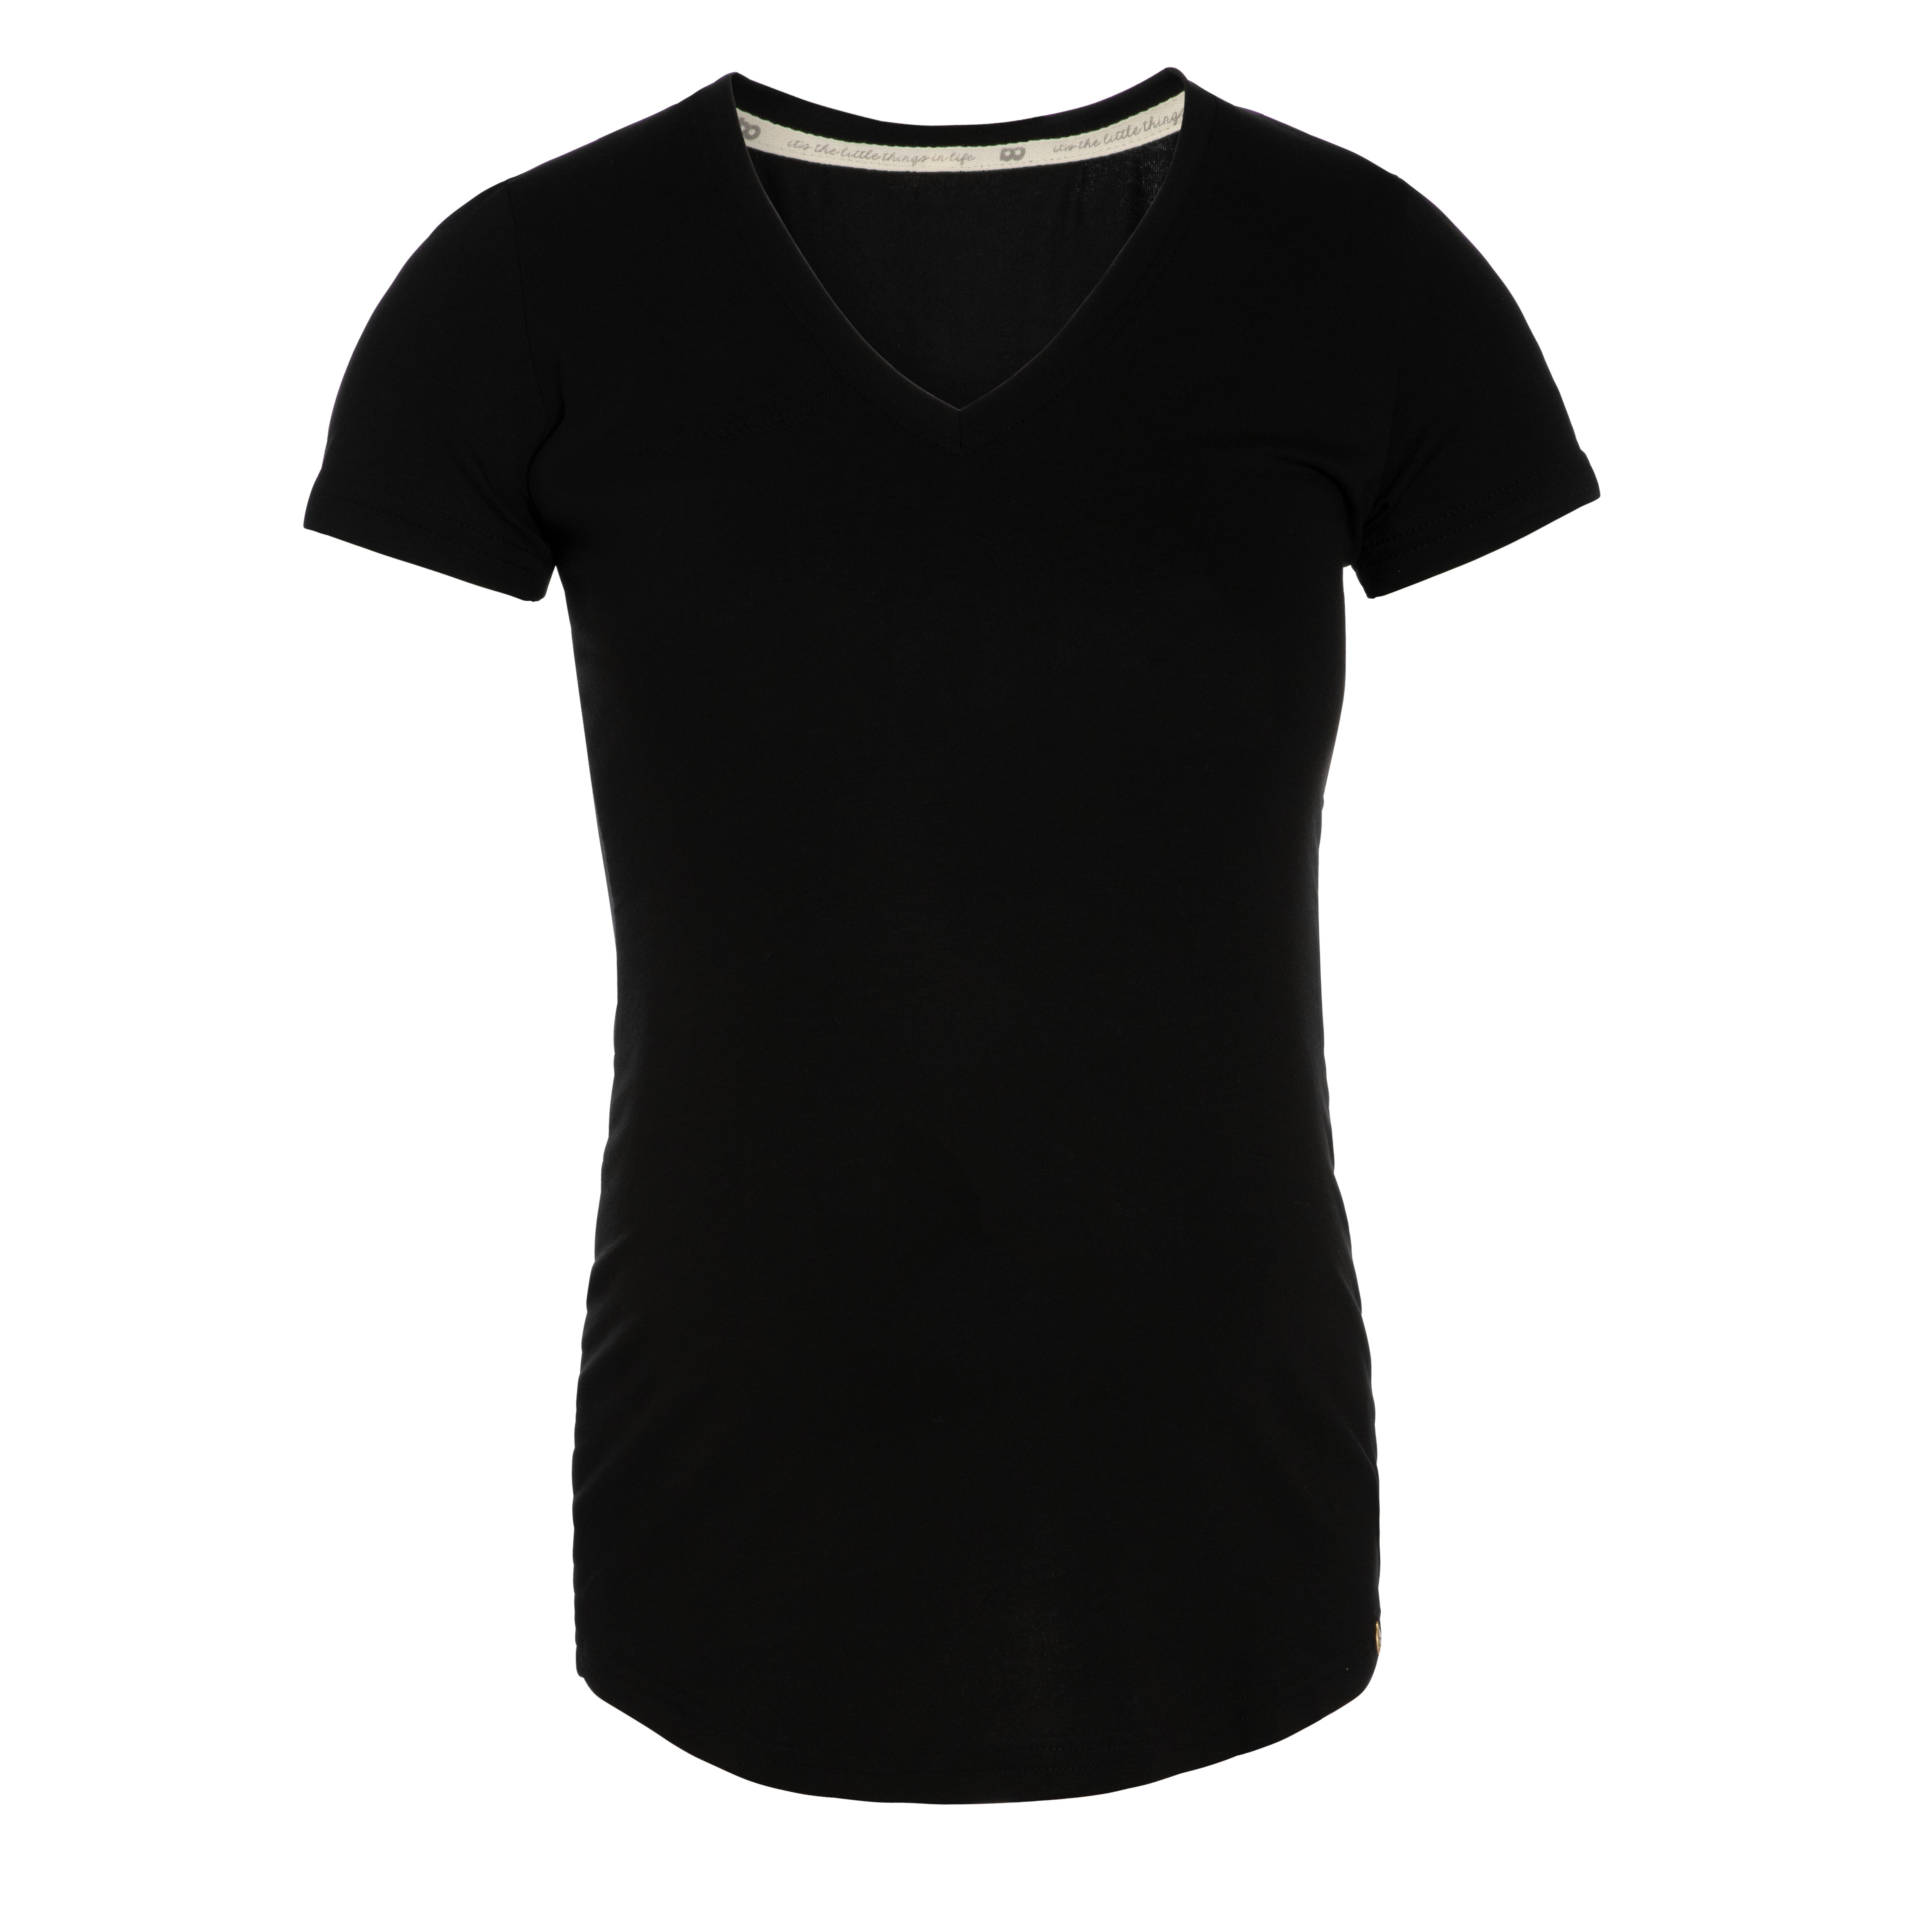 Maternity T-shirt Glow black - XL